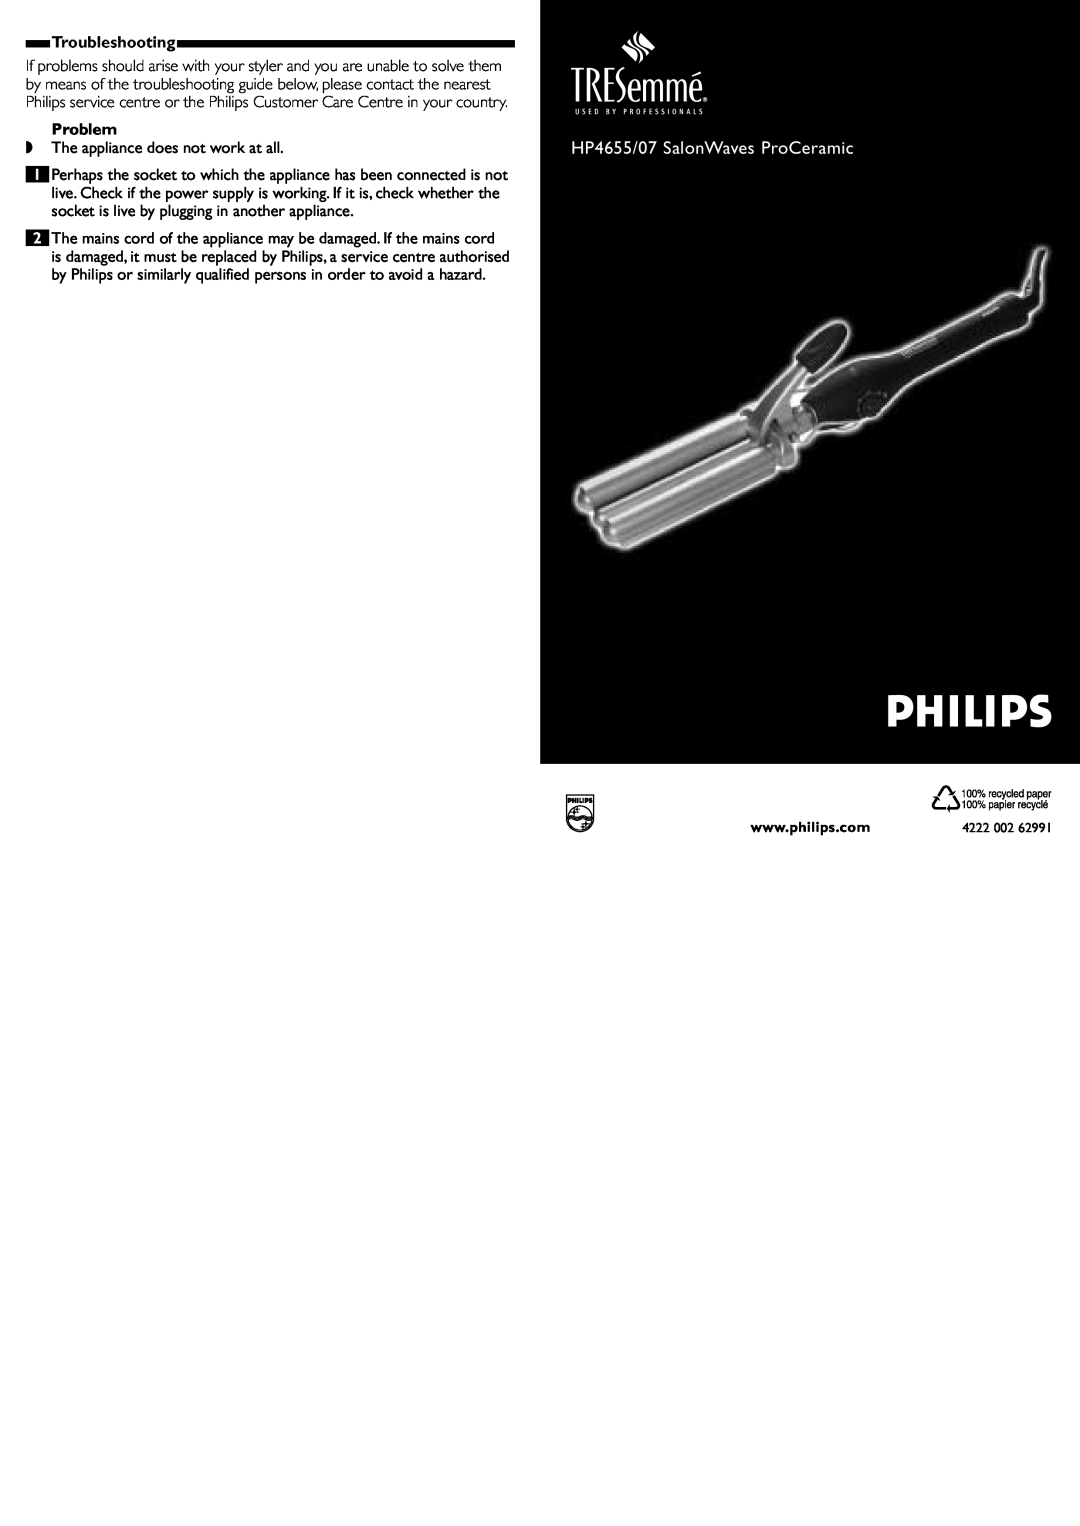 Philips manual Troubleshooting, Problem, HP4655/07 SalonWaves ProCeramic 